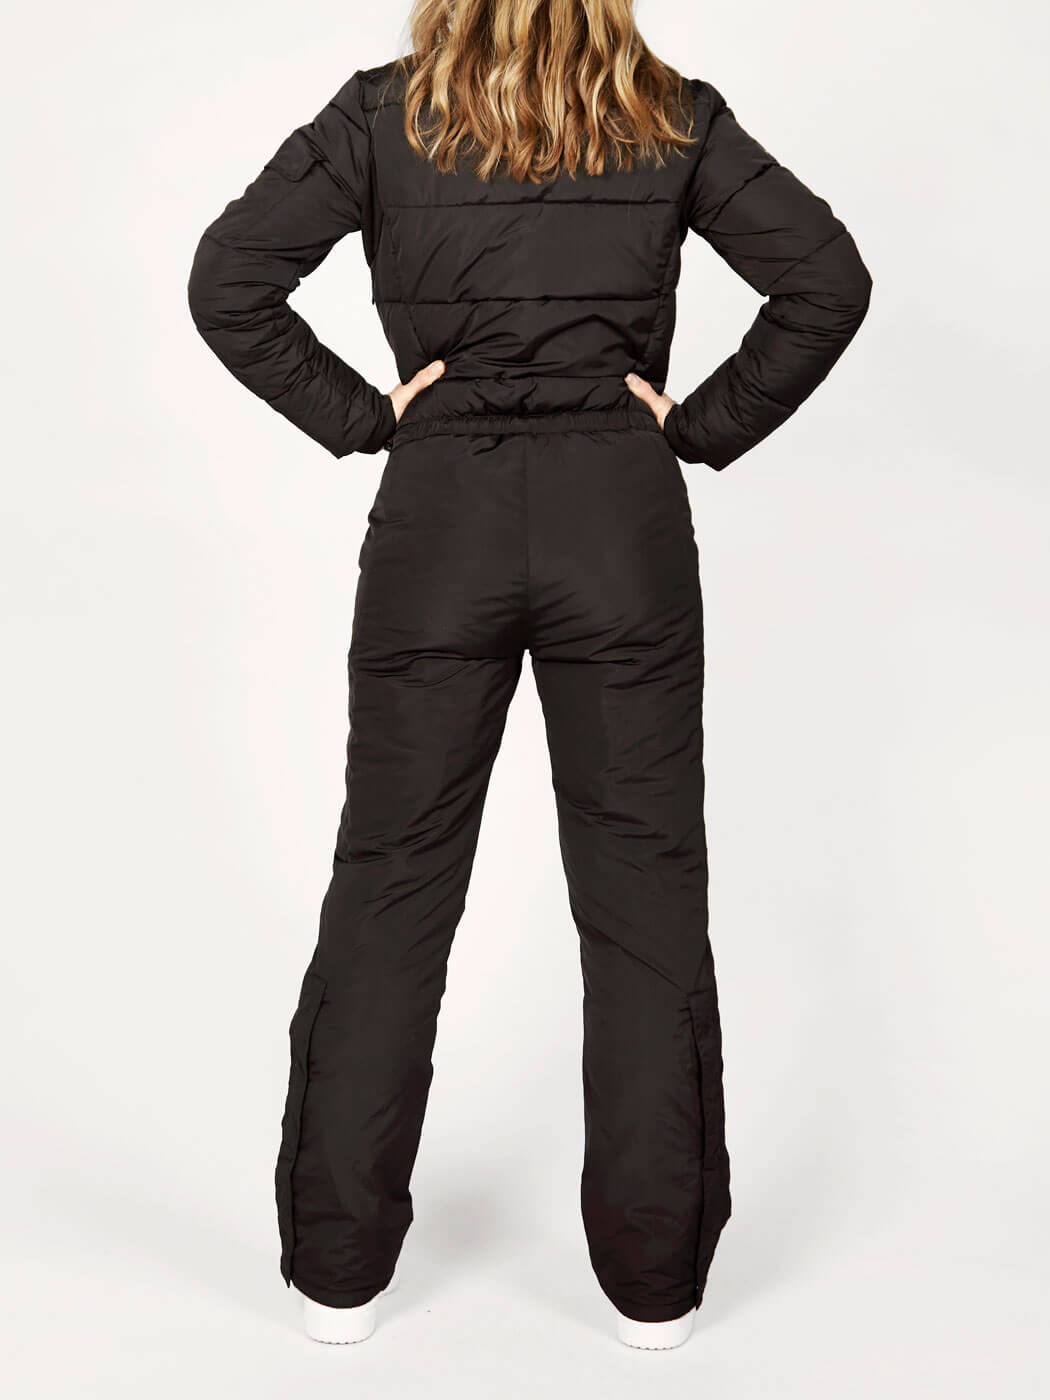 black-ski-suit-for-women-at-the-dalset-danish-design